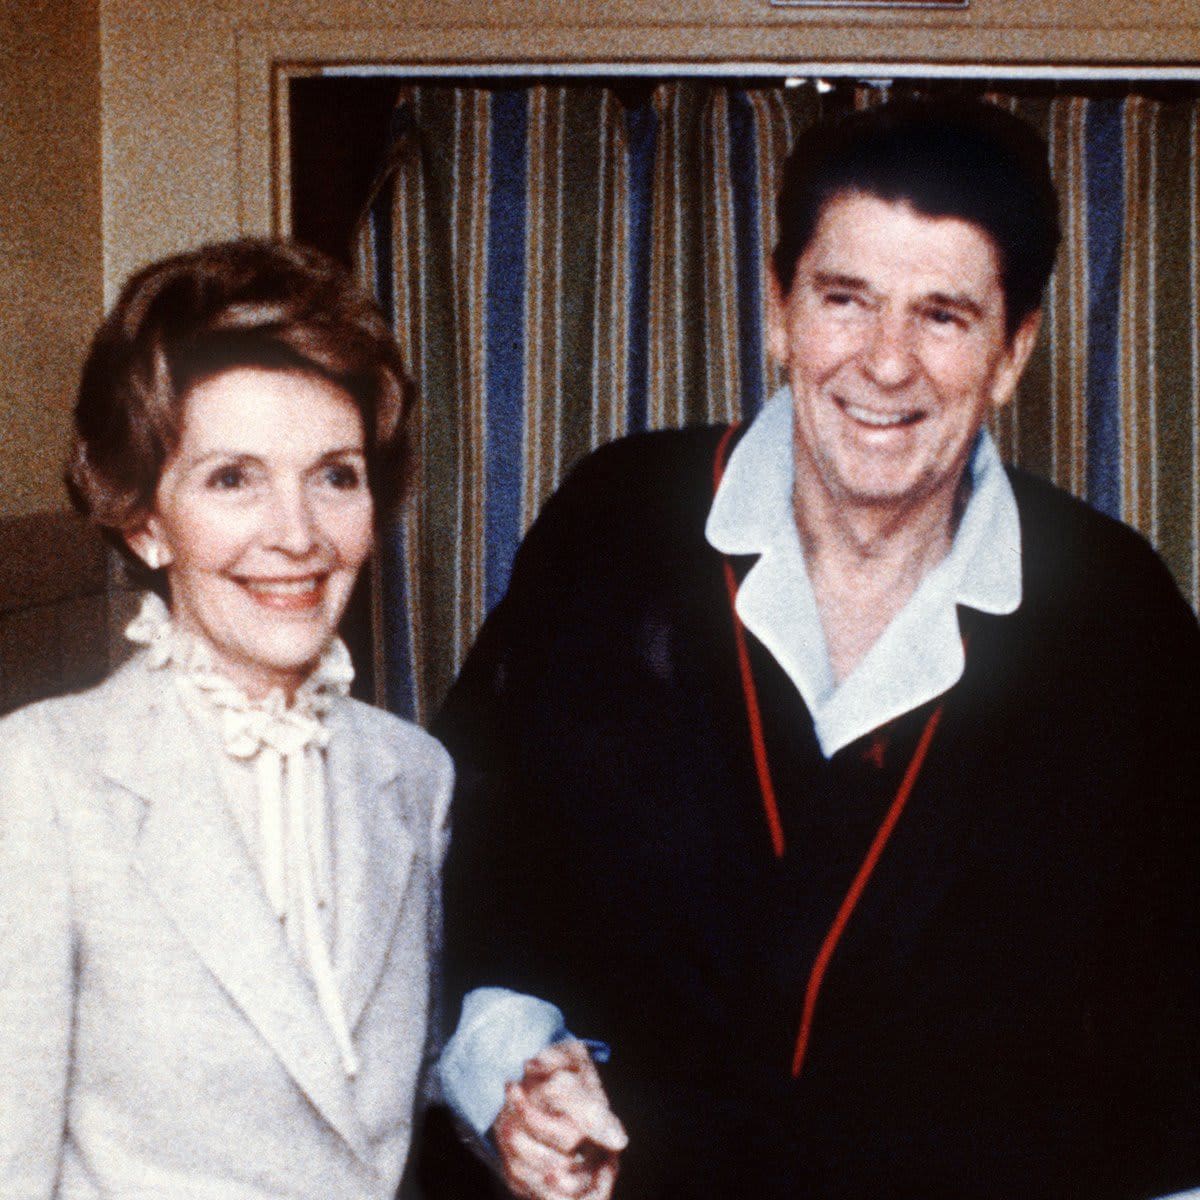 President Reagan At George Washington University Hospital After Assassination Attempt